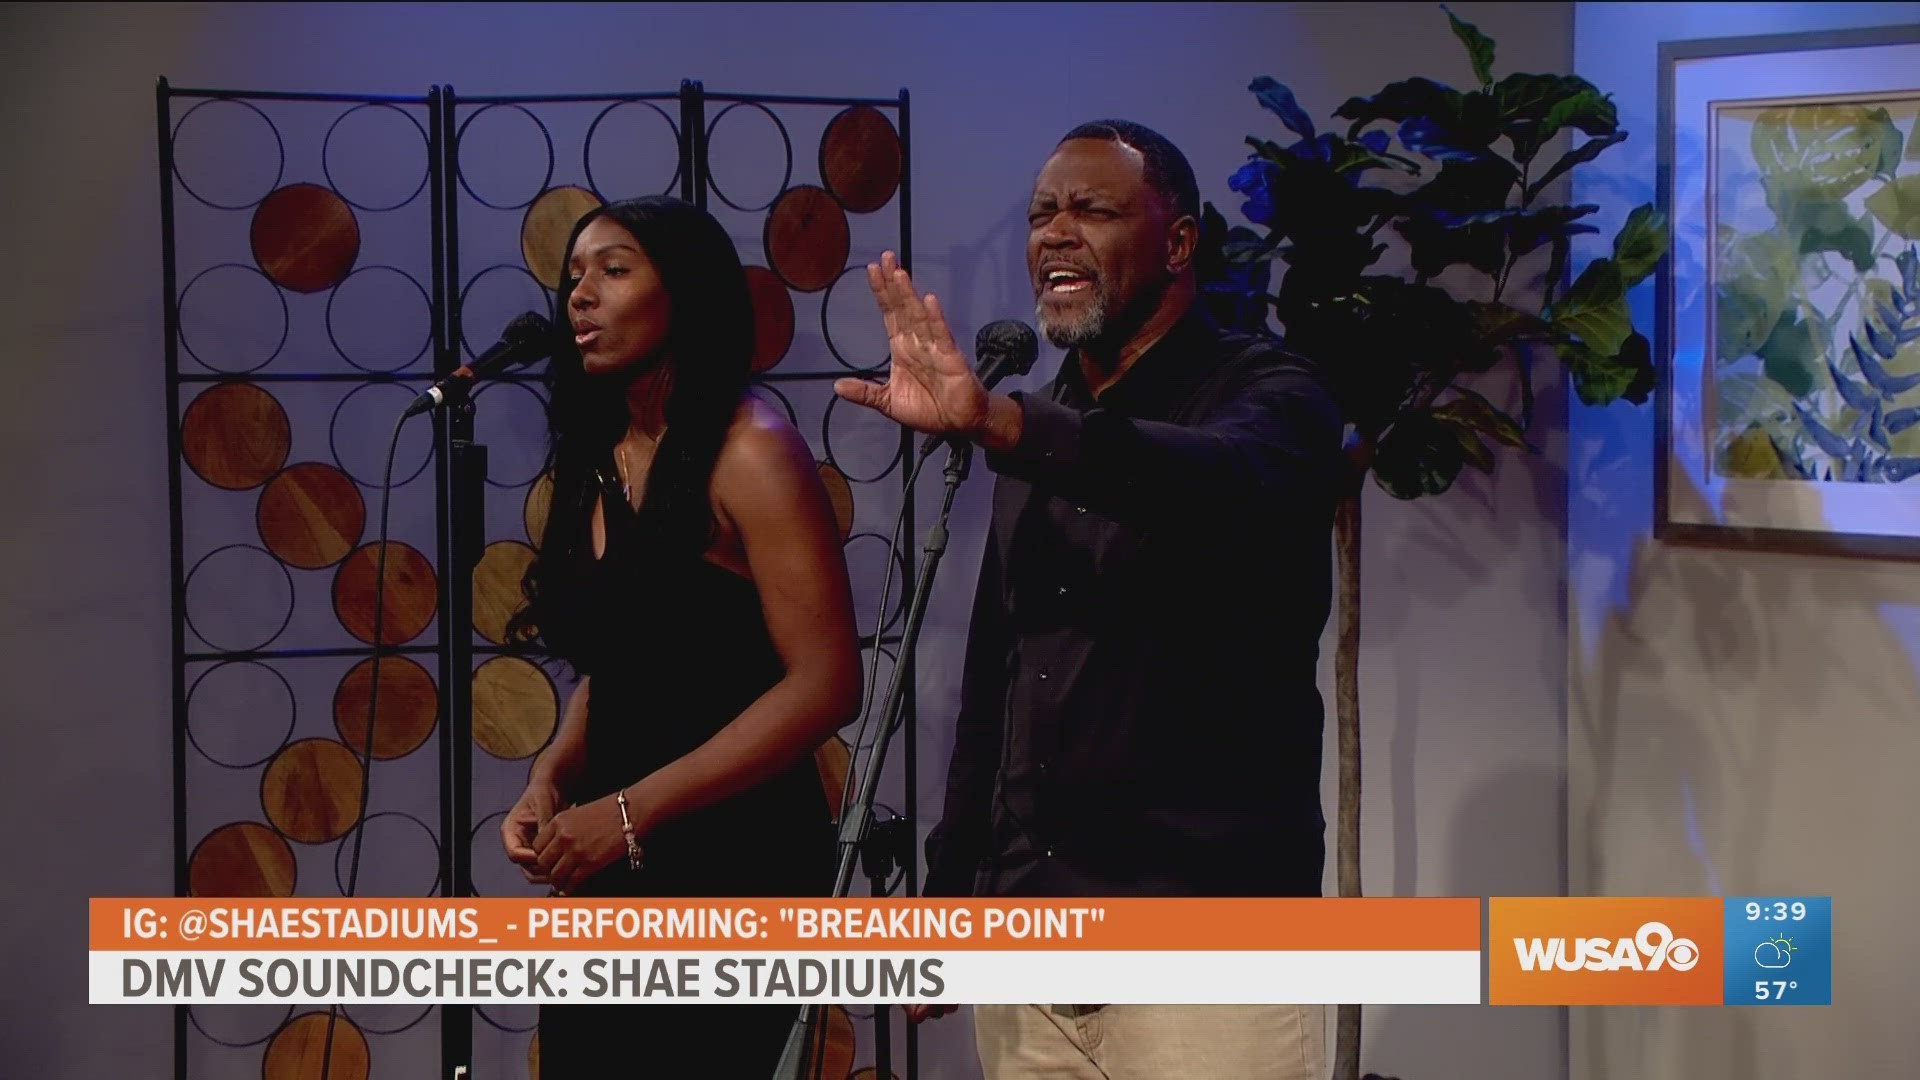 Maryland Native Singer/Songwriter Shae Stadiums & Alahn perform "Breaking Point" for the DMV Soundcheck!